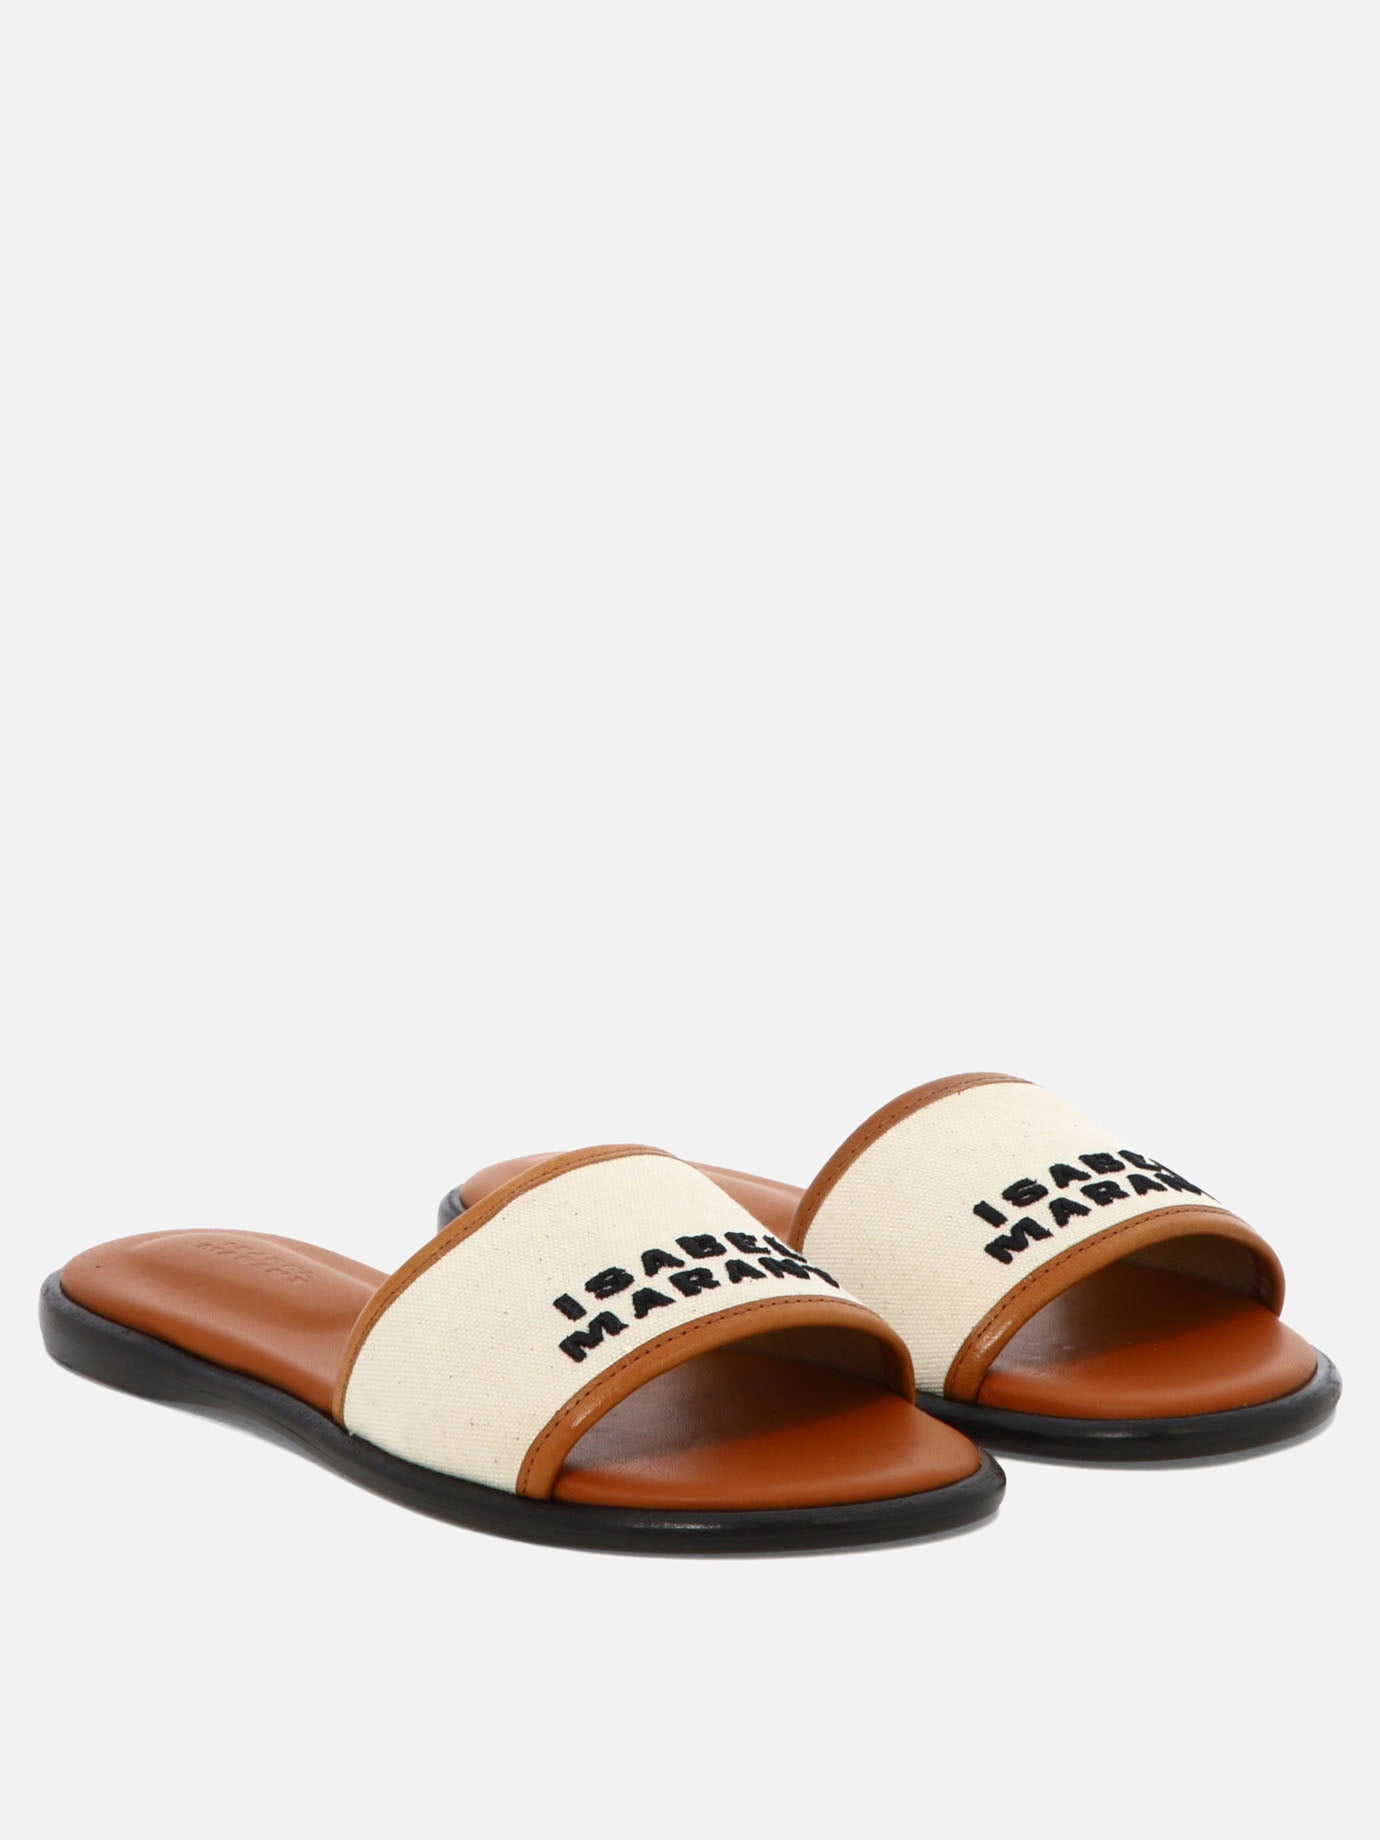 "Vikee" sandals